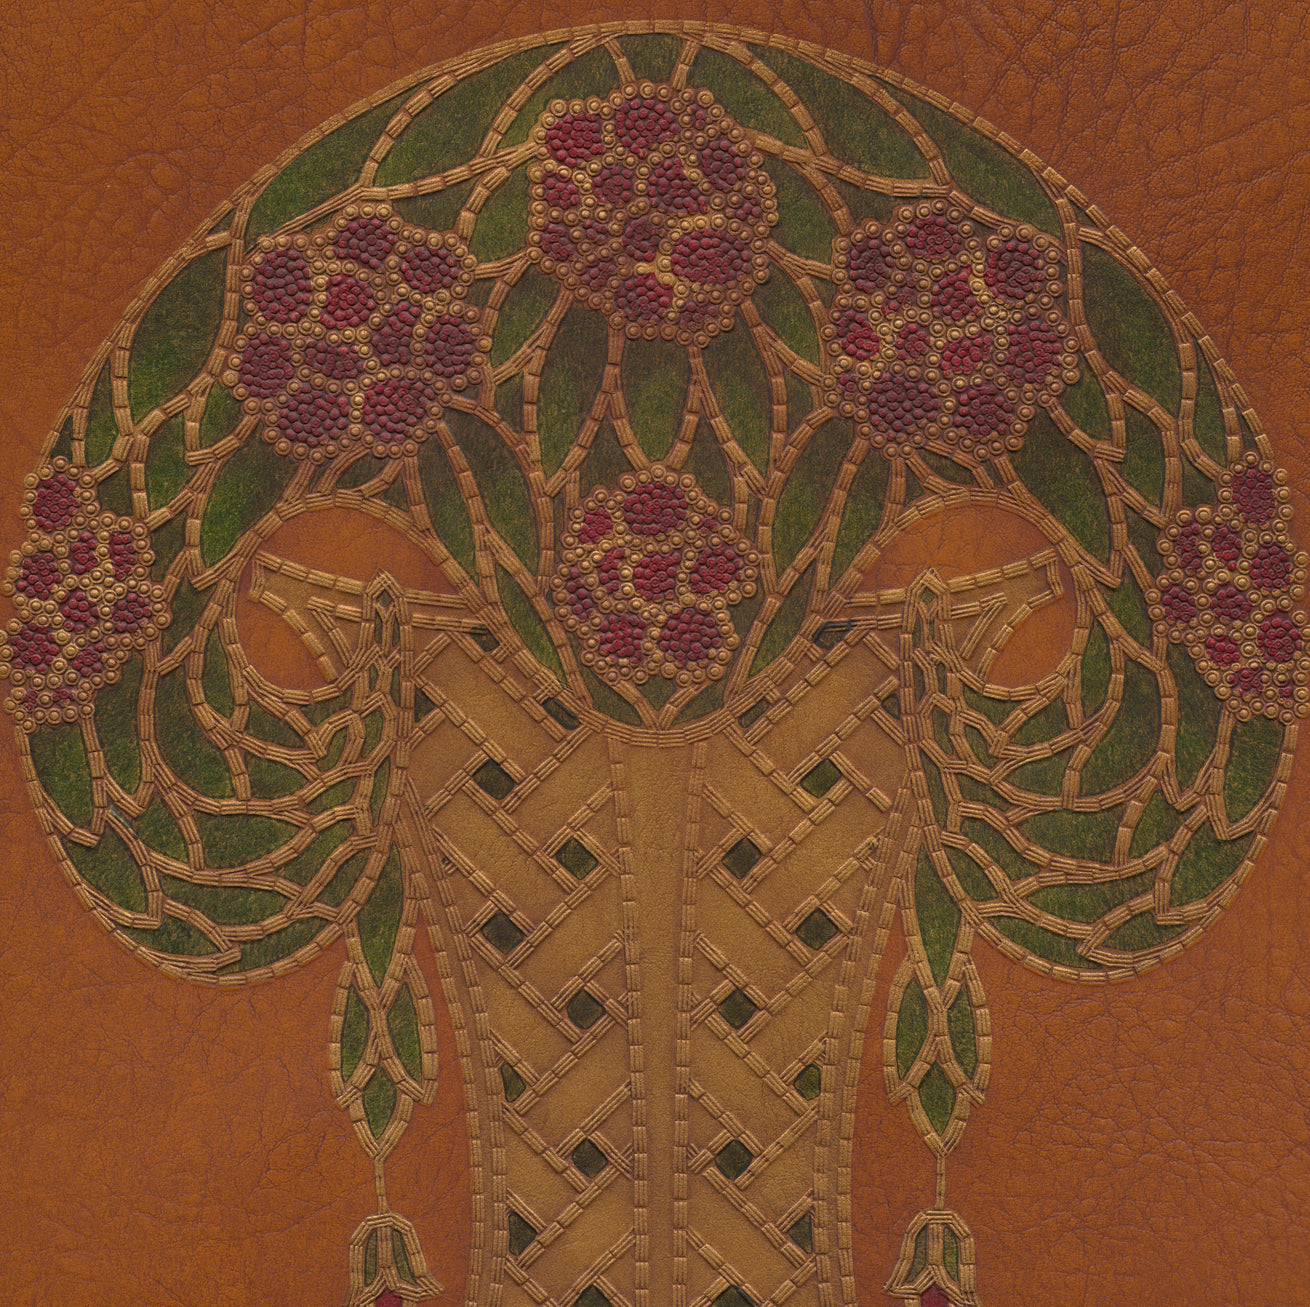 Stylized Floral Basket Ornament on Leather - Antique Wallpaper Remnant